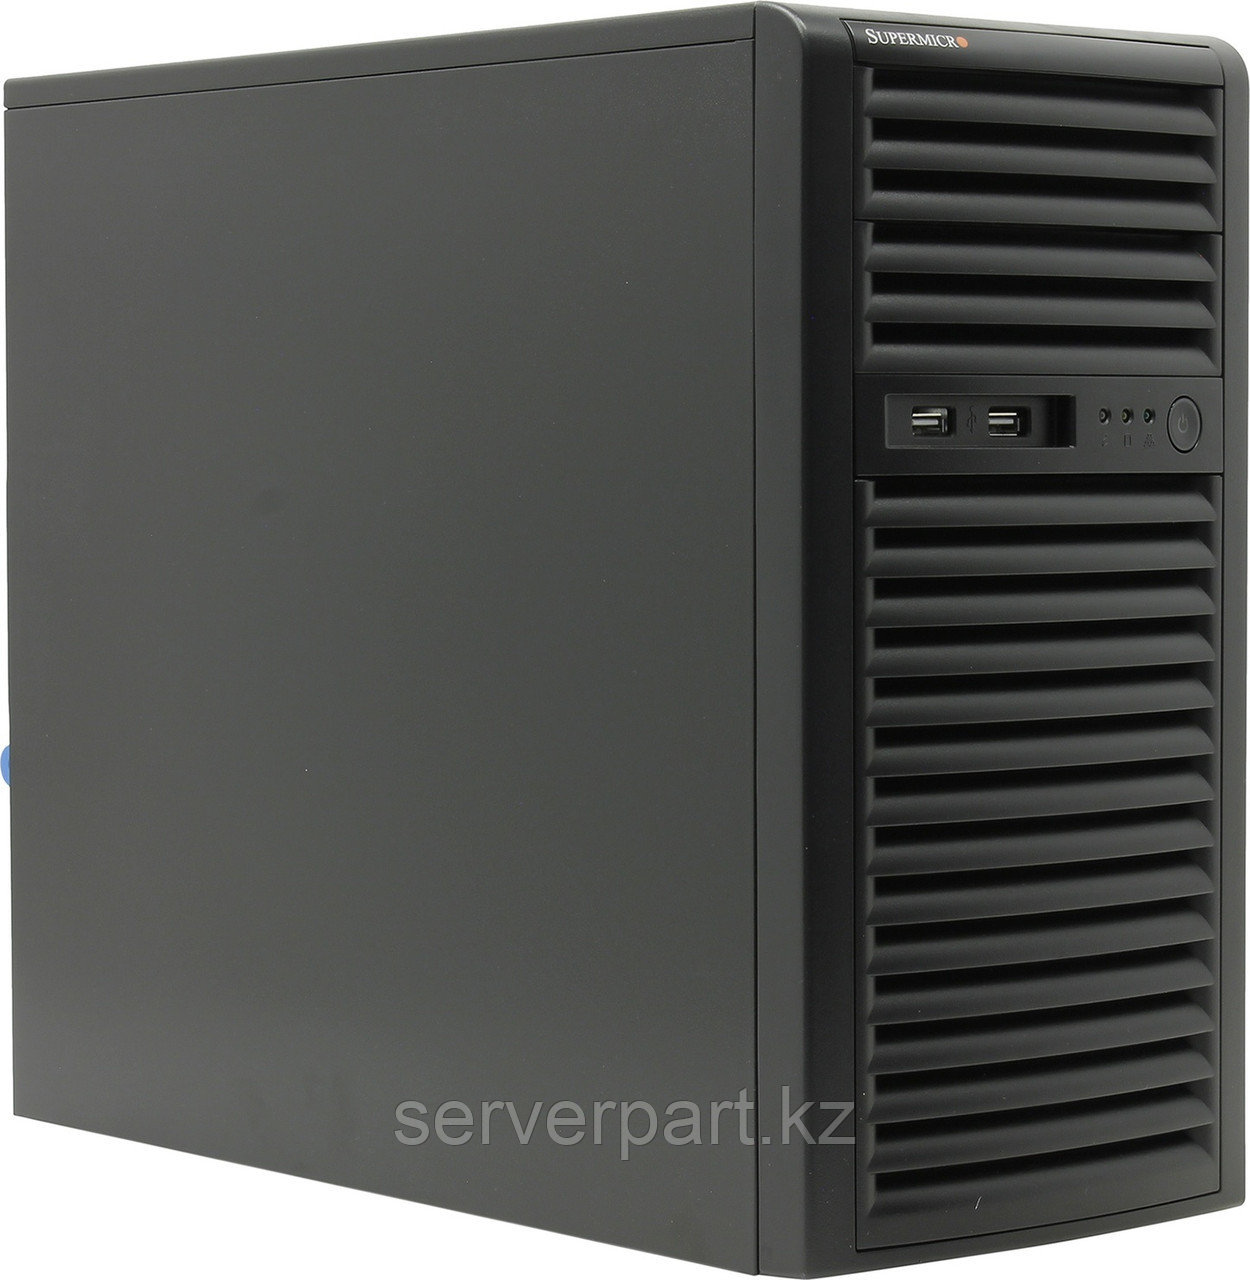 Сервер Supermicro SYS-5039C (Tower 4LFF)/4-core intel xeon E2224 (3.4GHz)/32GB EUDIMM